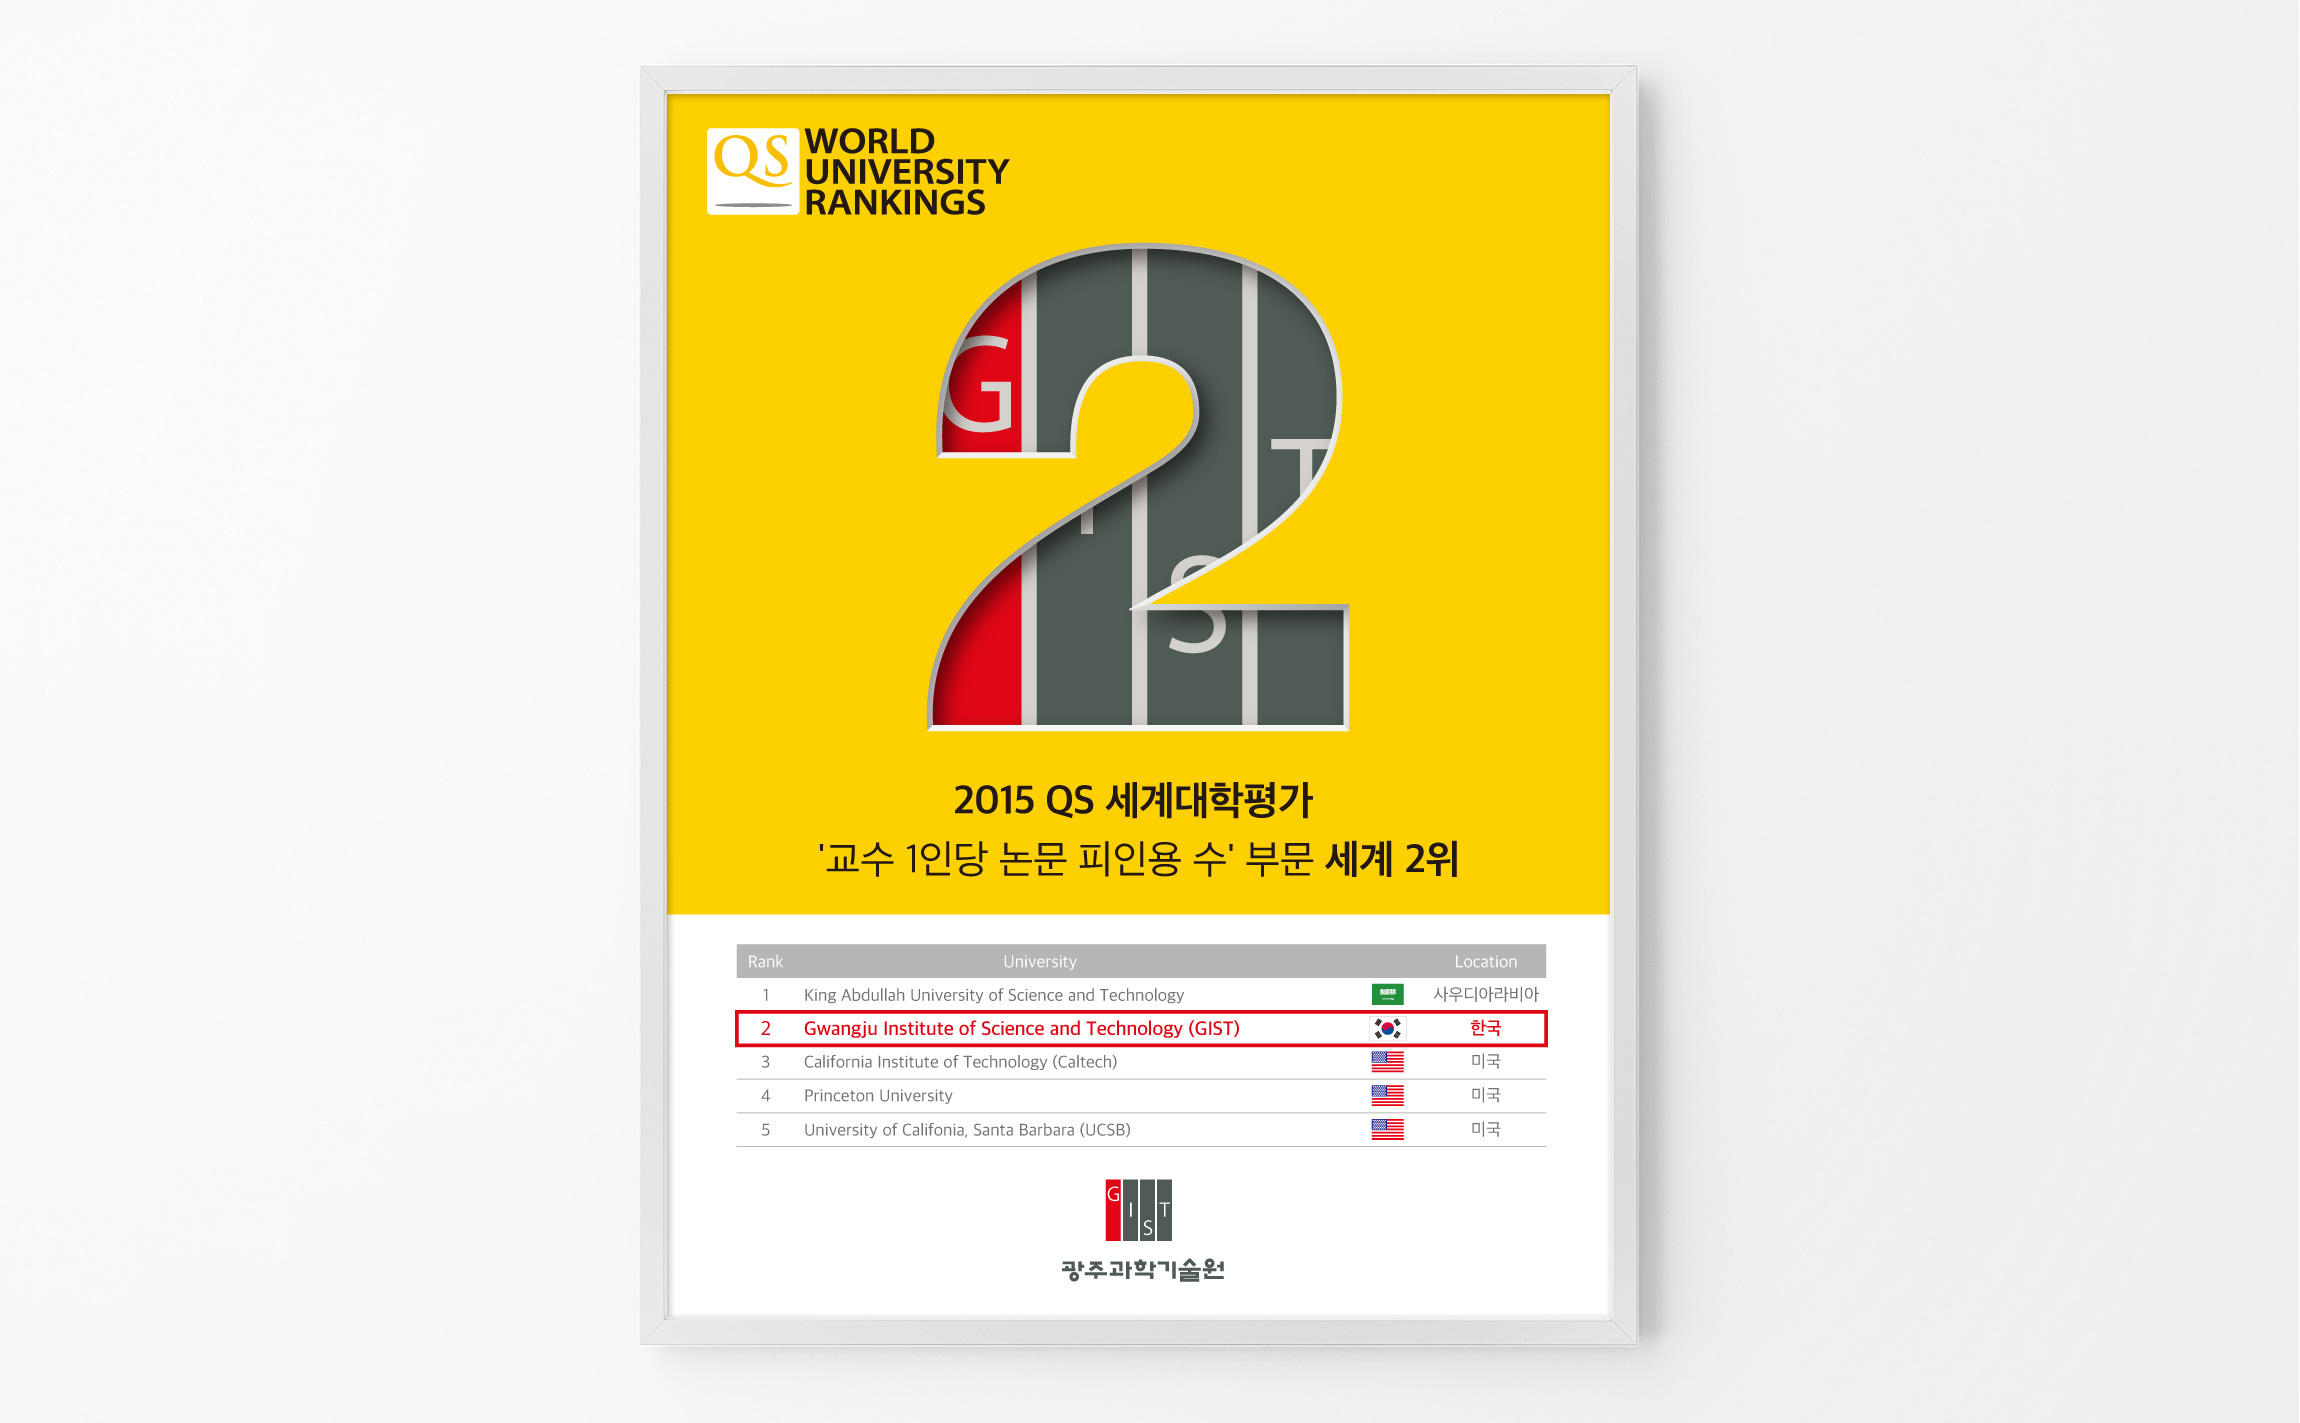 GIST at the 2nd 광주과학기술원 (GIST) 그래픽 gist-poster-2.jpg